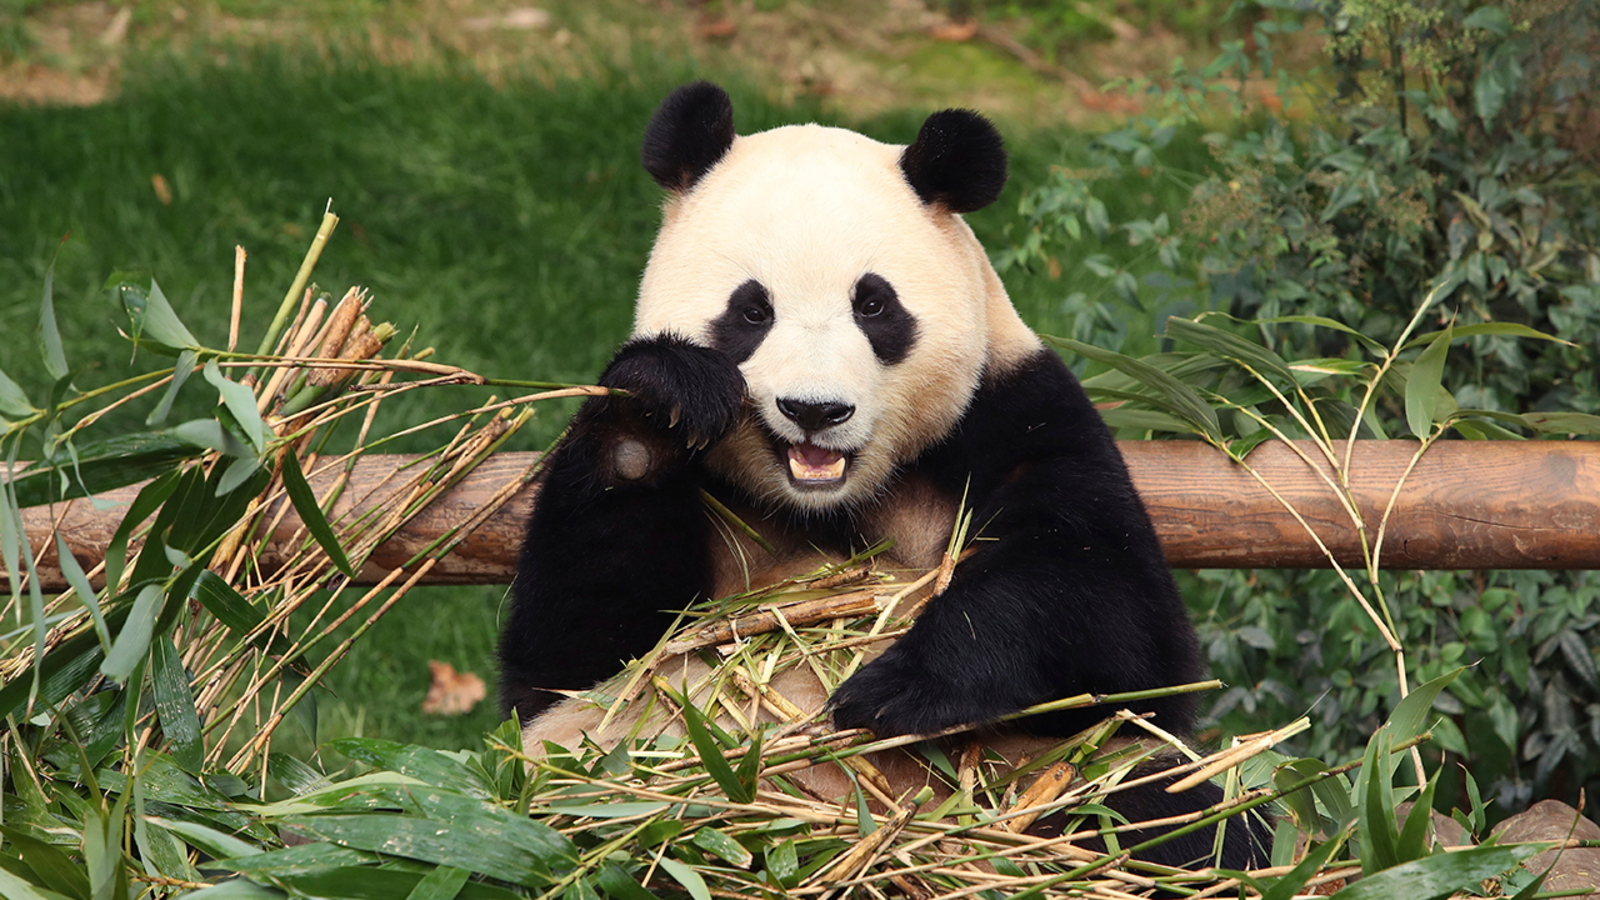 San Francisco supervisors approve fundraising plan to host pandas at zoo